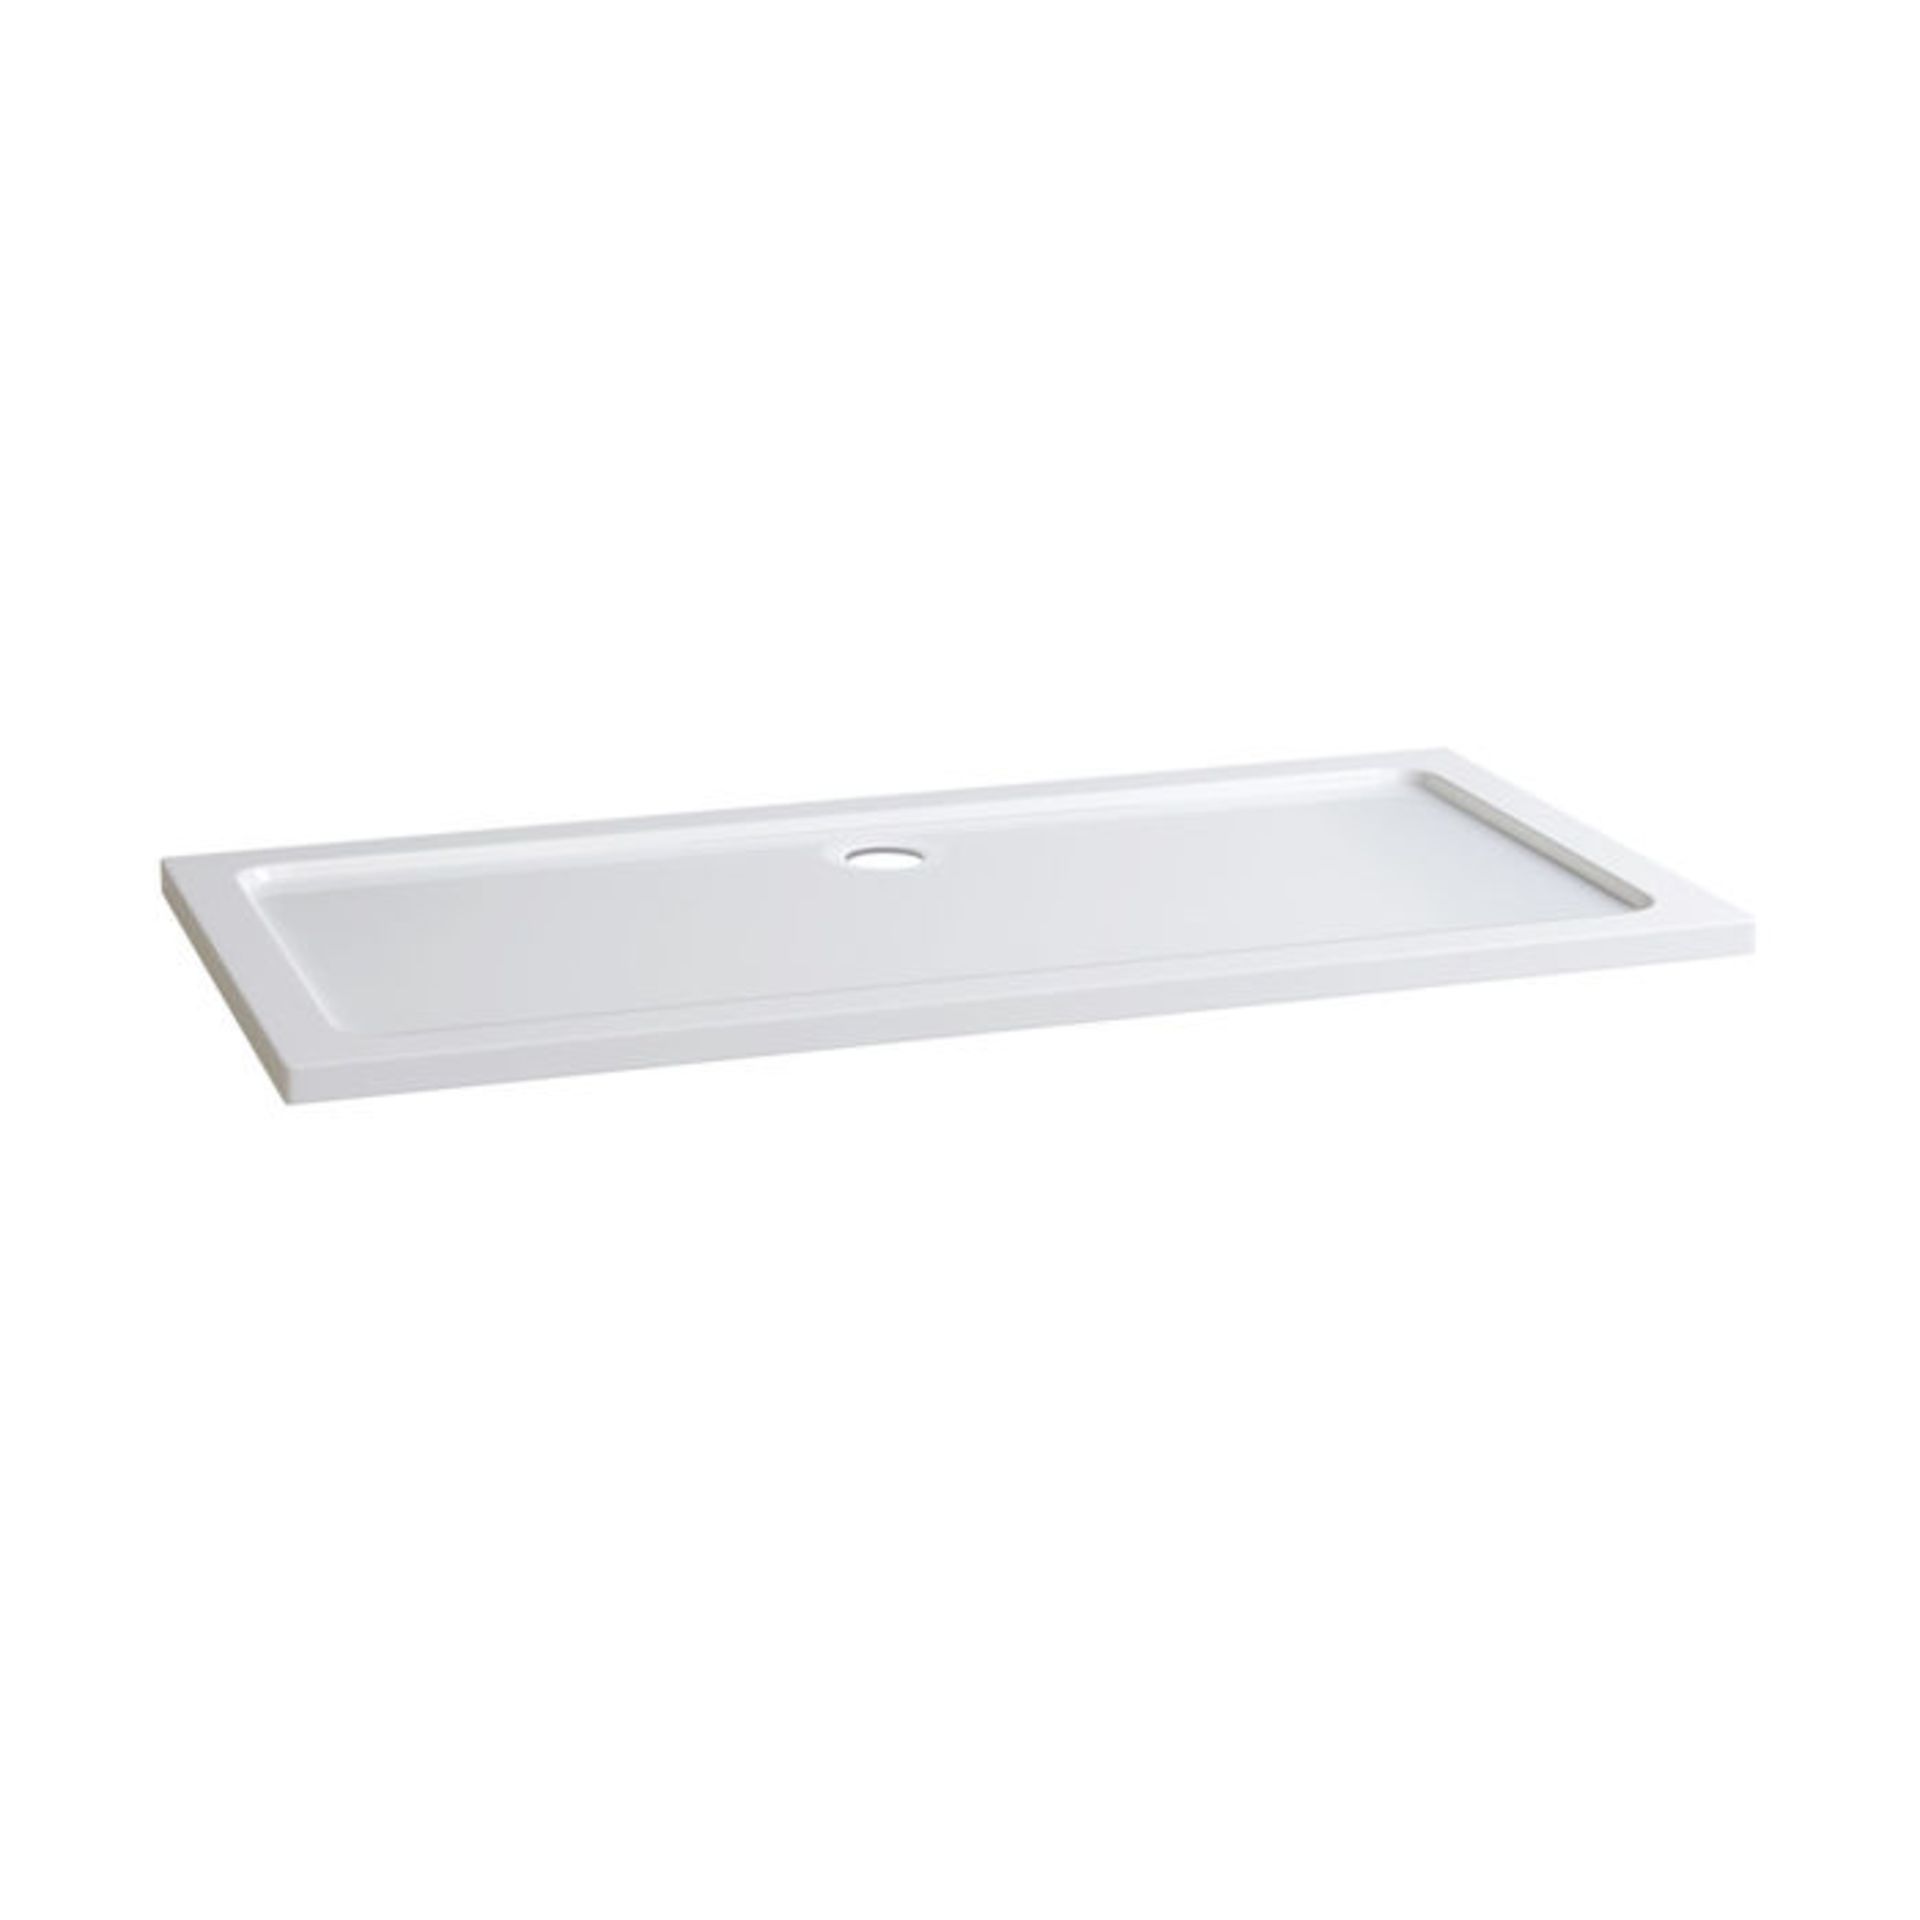 (VN178) 1700x800mm Rectangular Ultra Slim Stone Shower Tray. Low profile ultra slim design Gel - Image 2 of 2